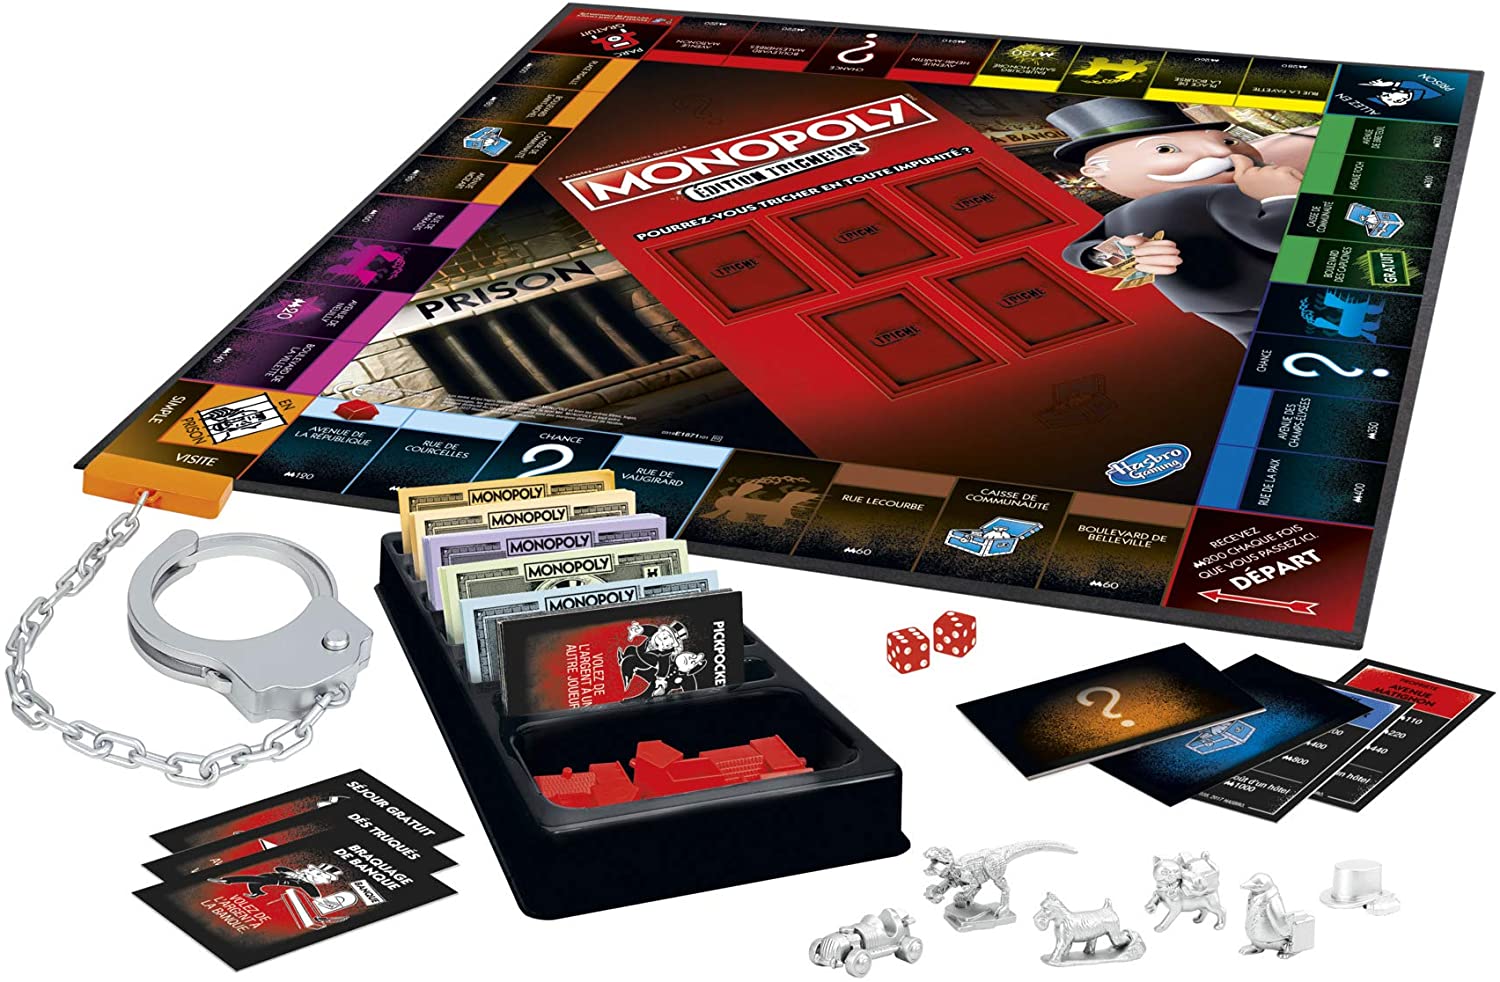 Monopoly Tricheur